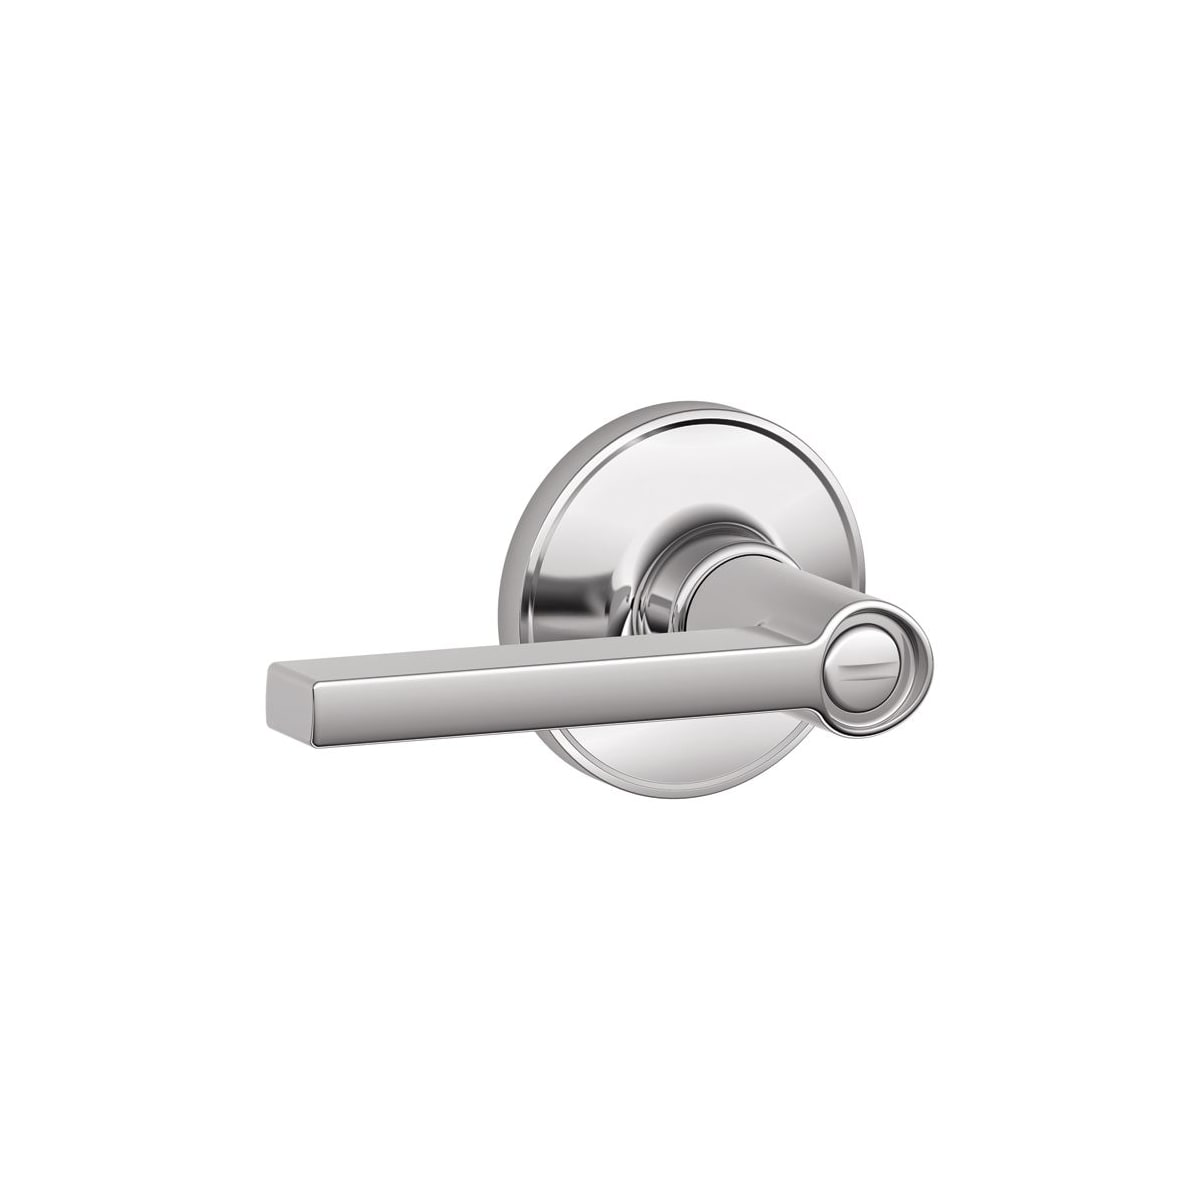 J40-DOV Door Knob Handle Privacy Bed Bath Lock Silver Chrome Dexter by Schlage 